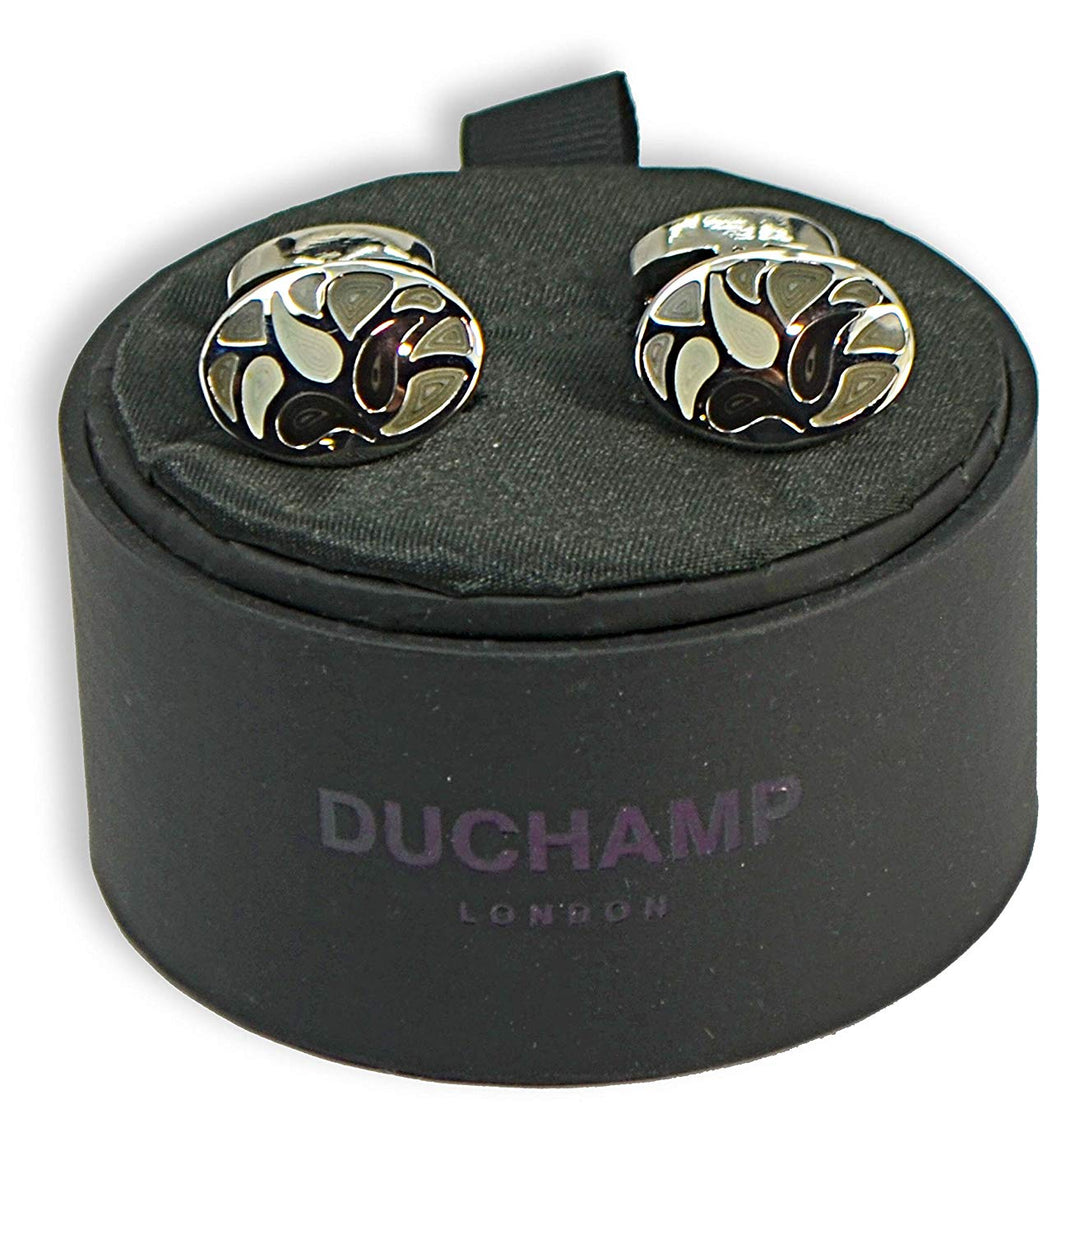 Duchamp London Colorful Cuff Links